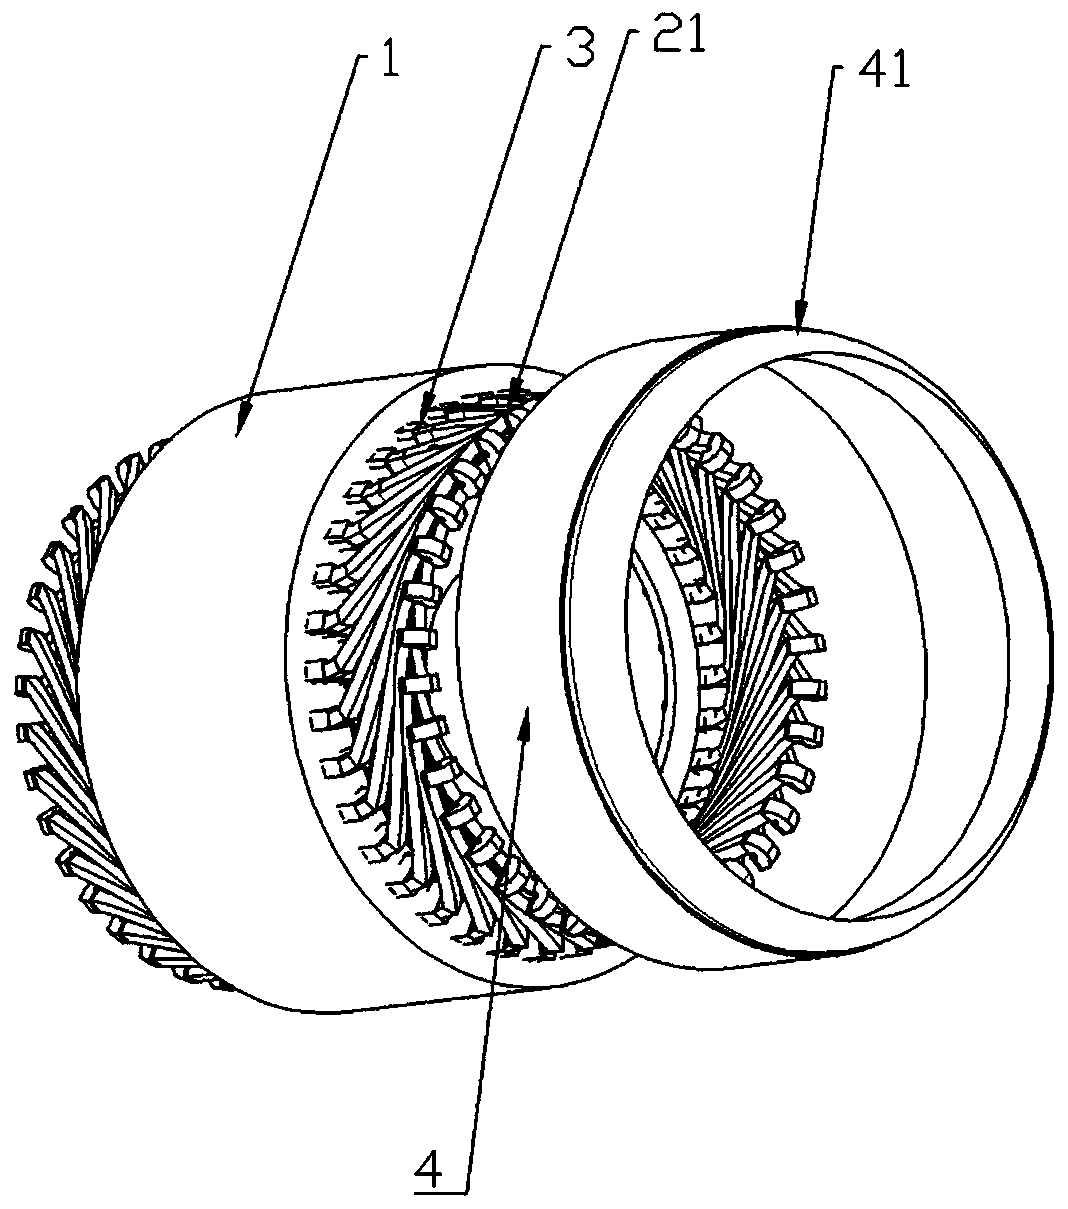 Heat radiation structure of motor stator winding